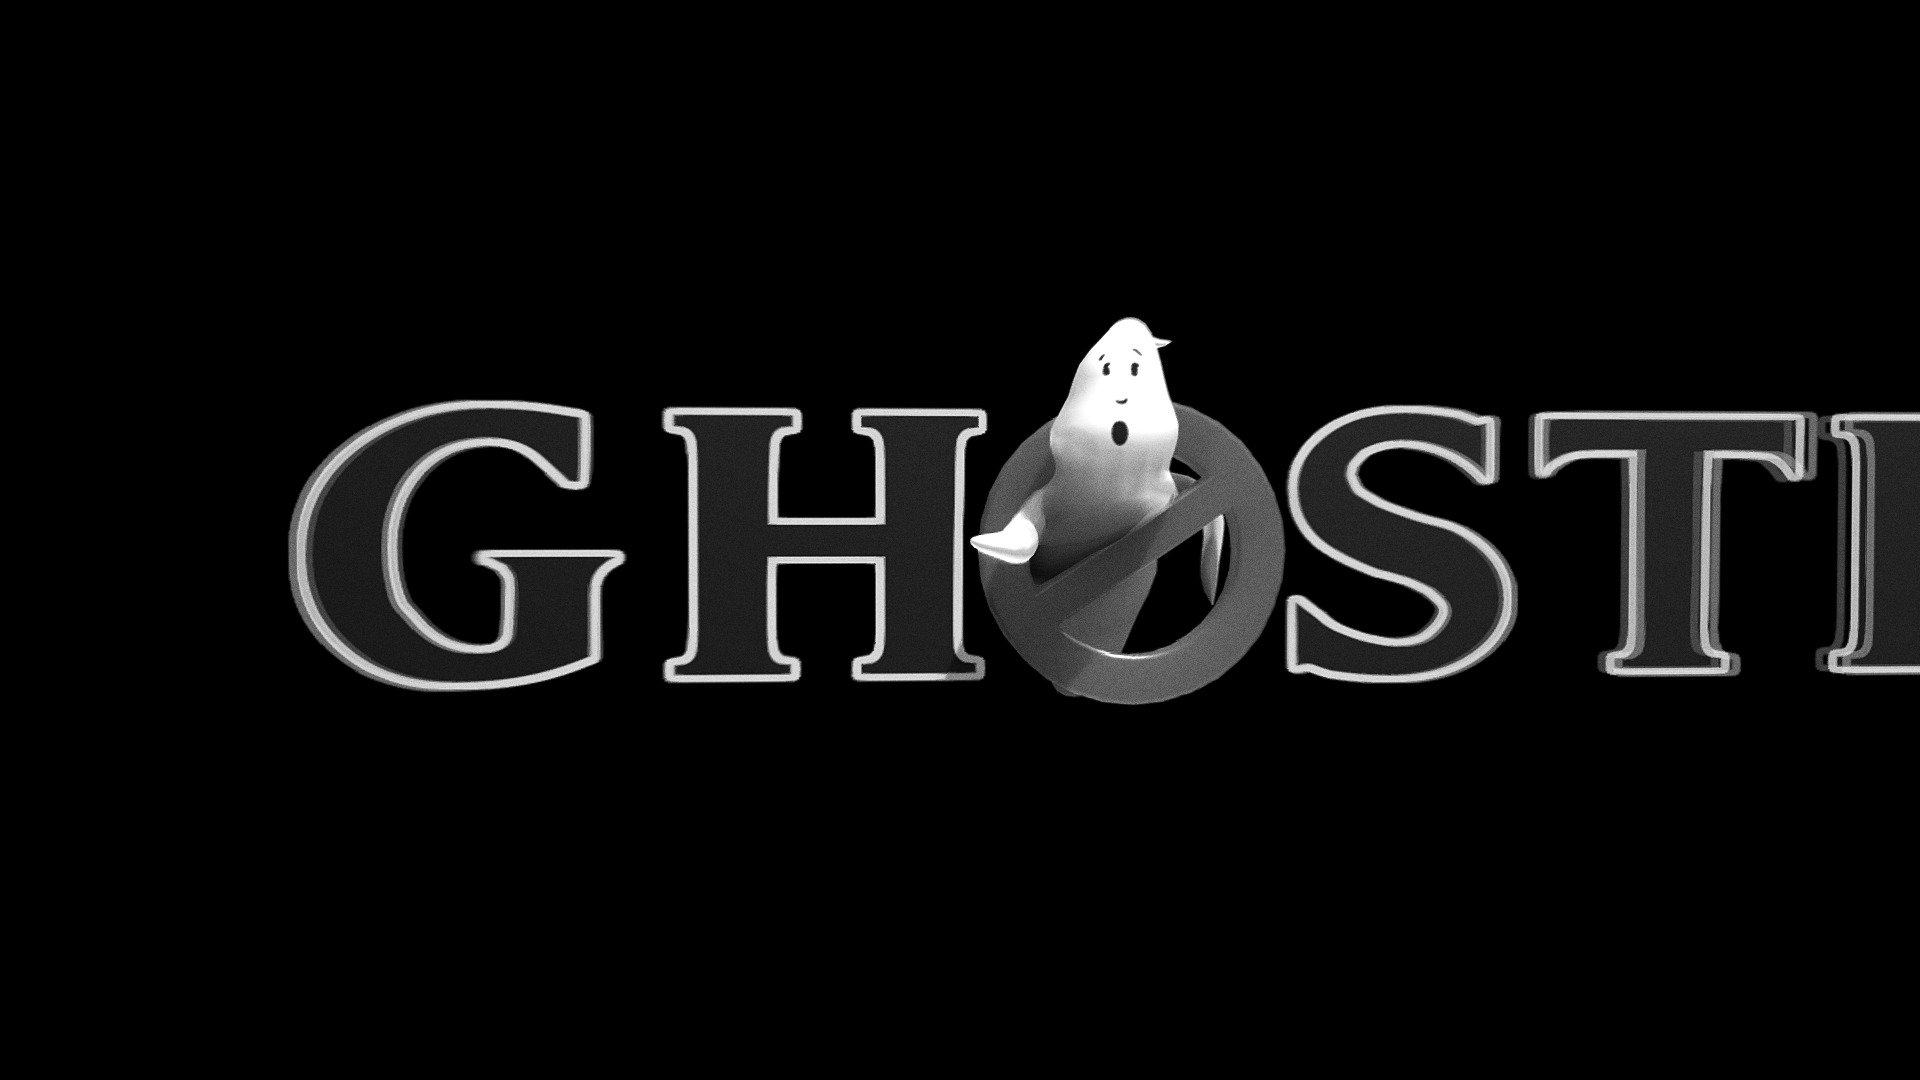 #22 Ghostbuster - Ghost "Inktober2019"